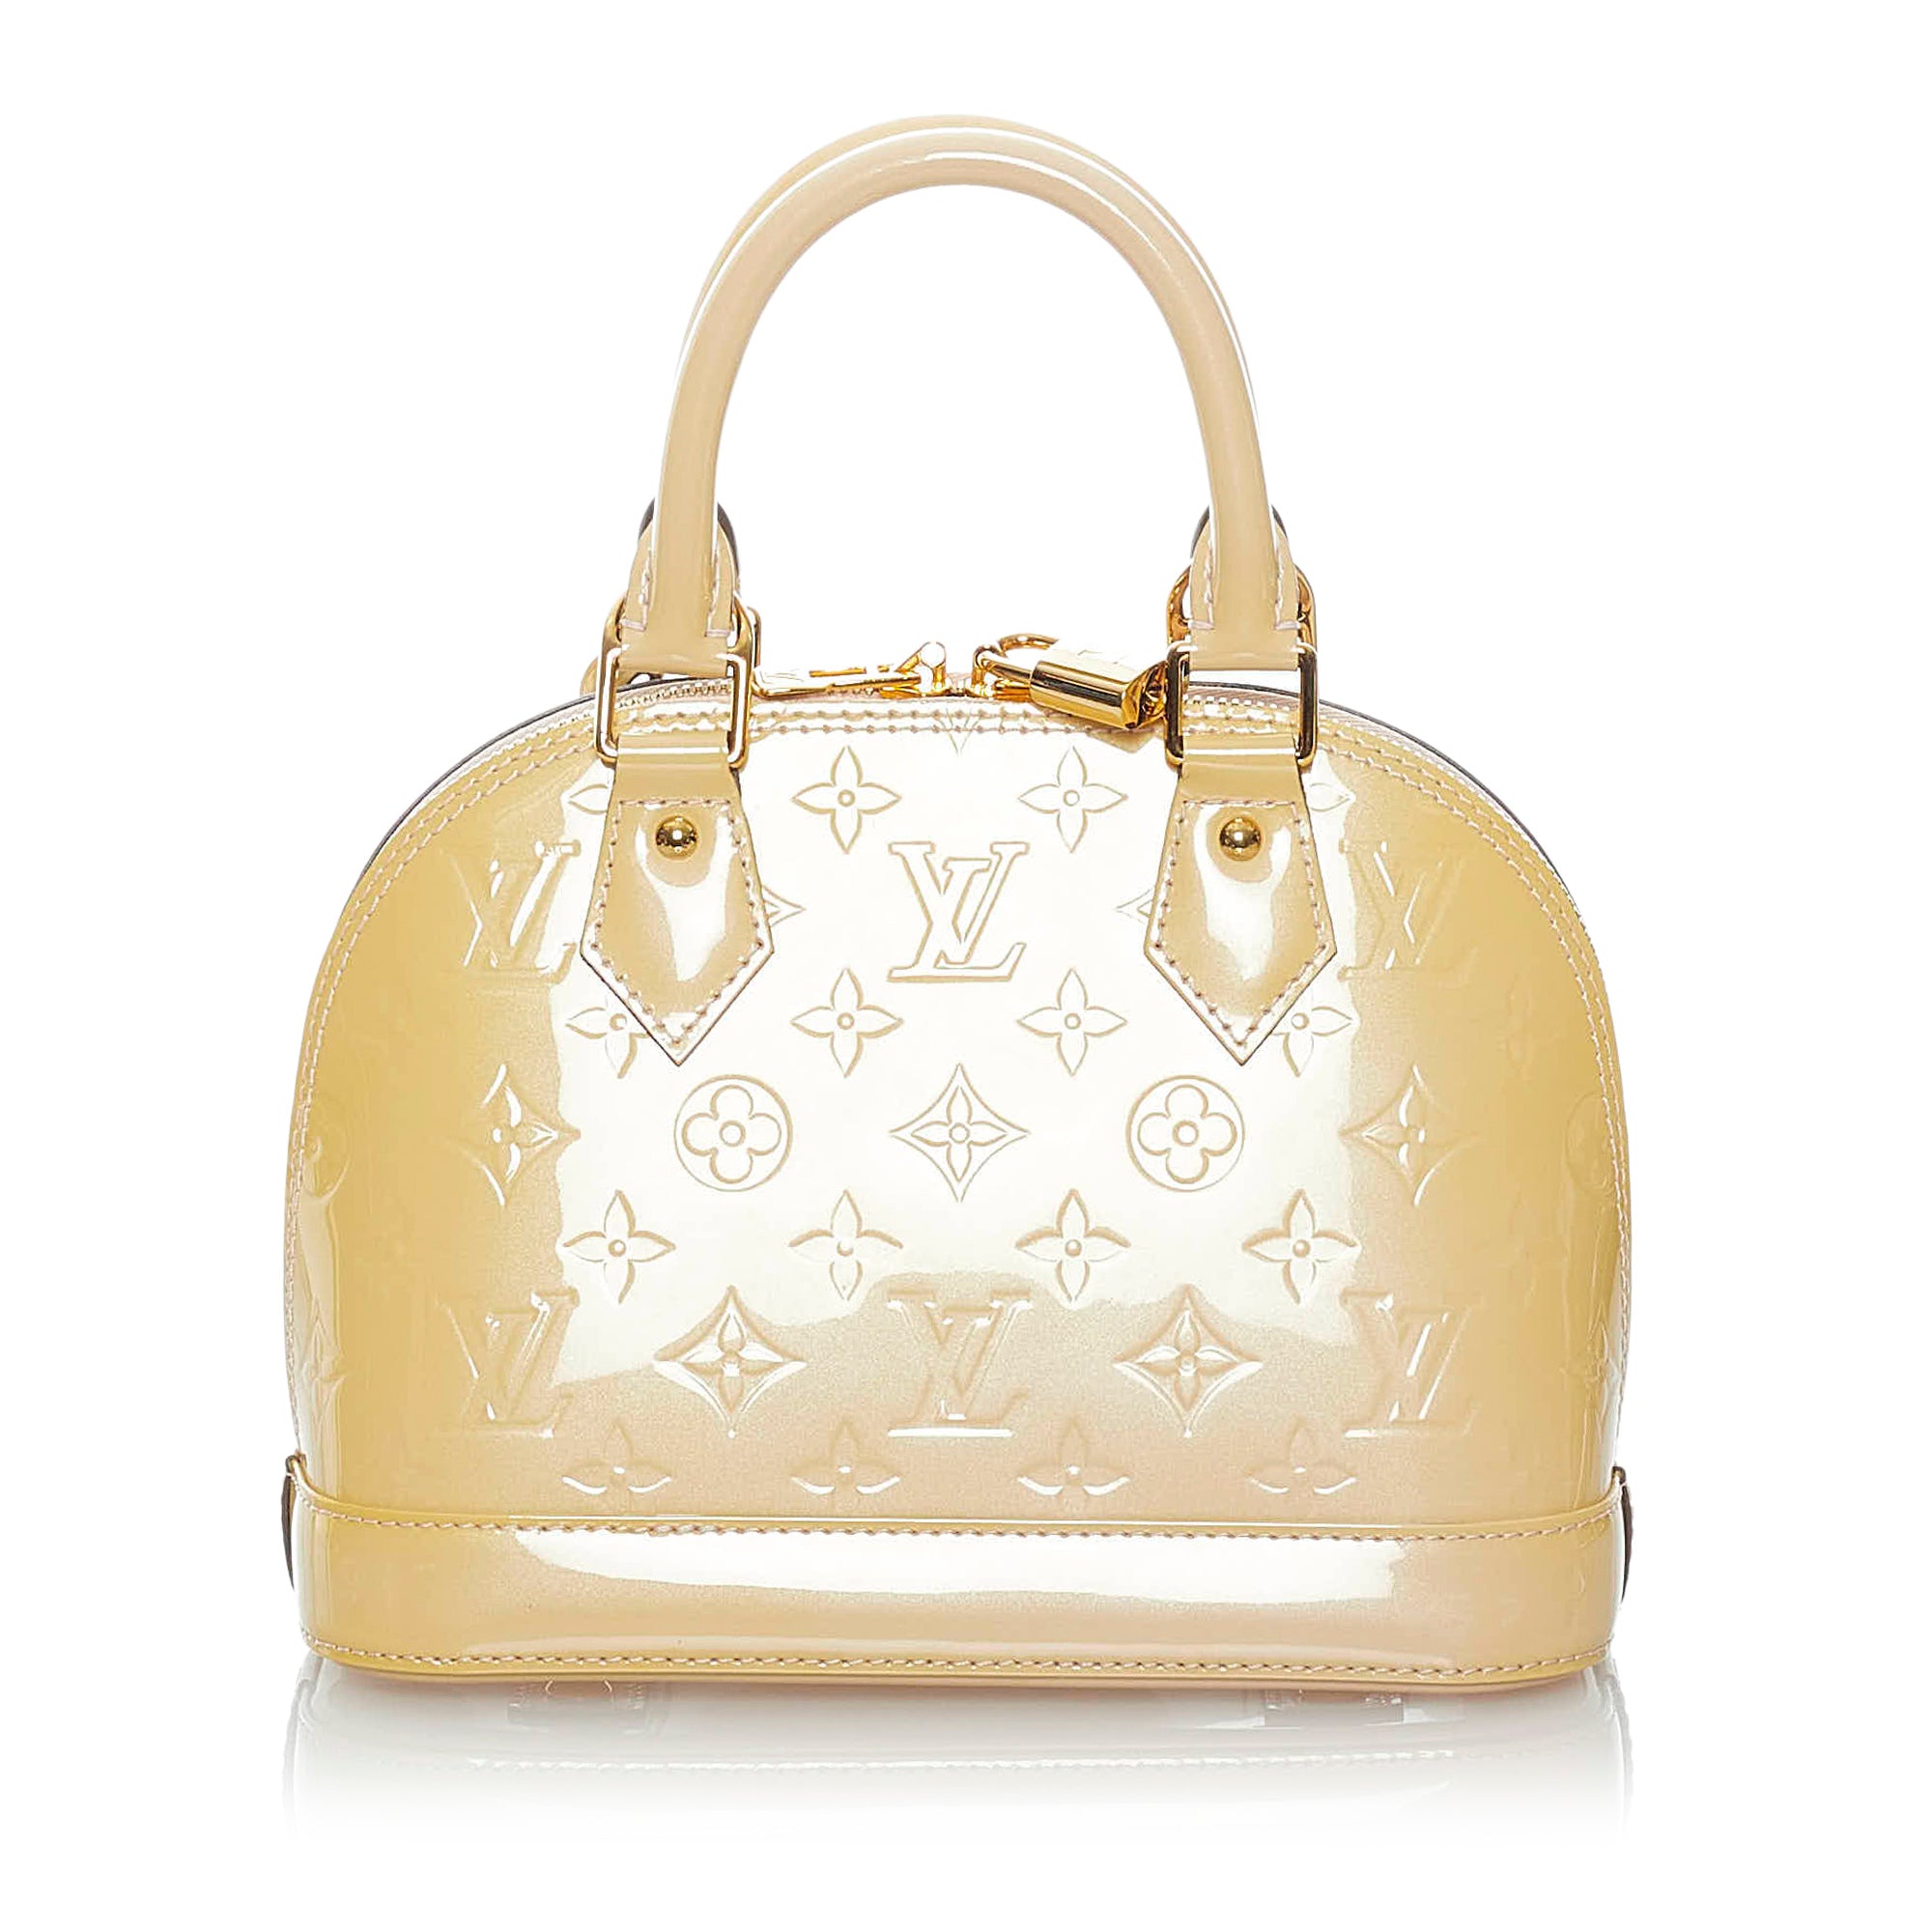 Louis Vuitton Cream Patent Leather Crossbody Bag